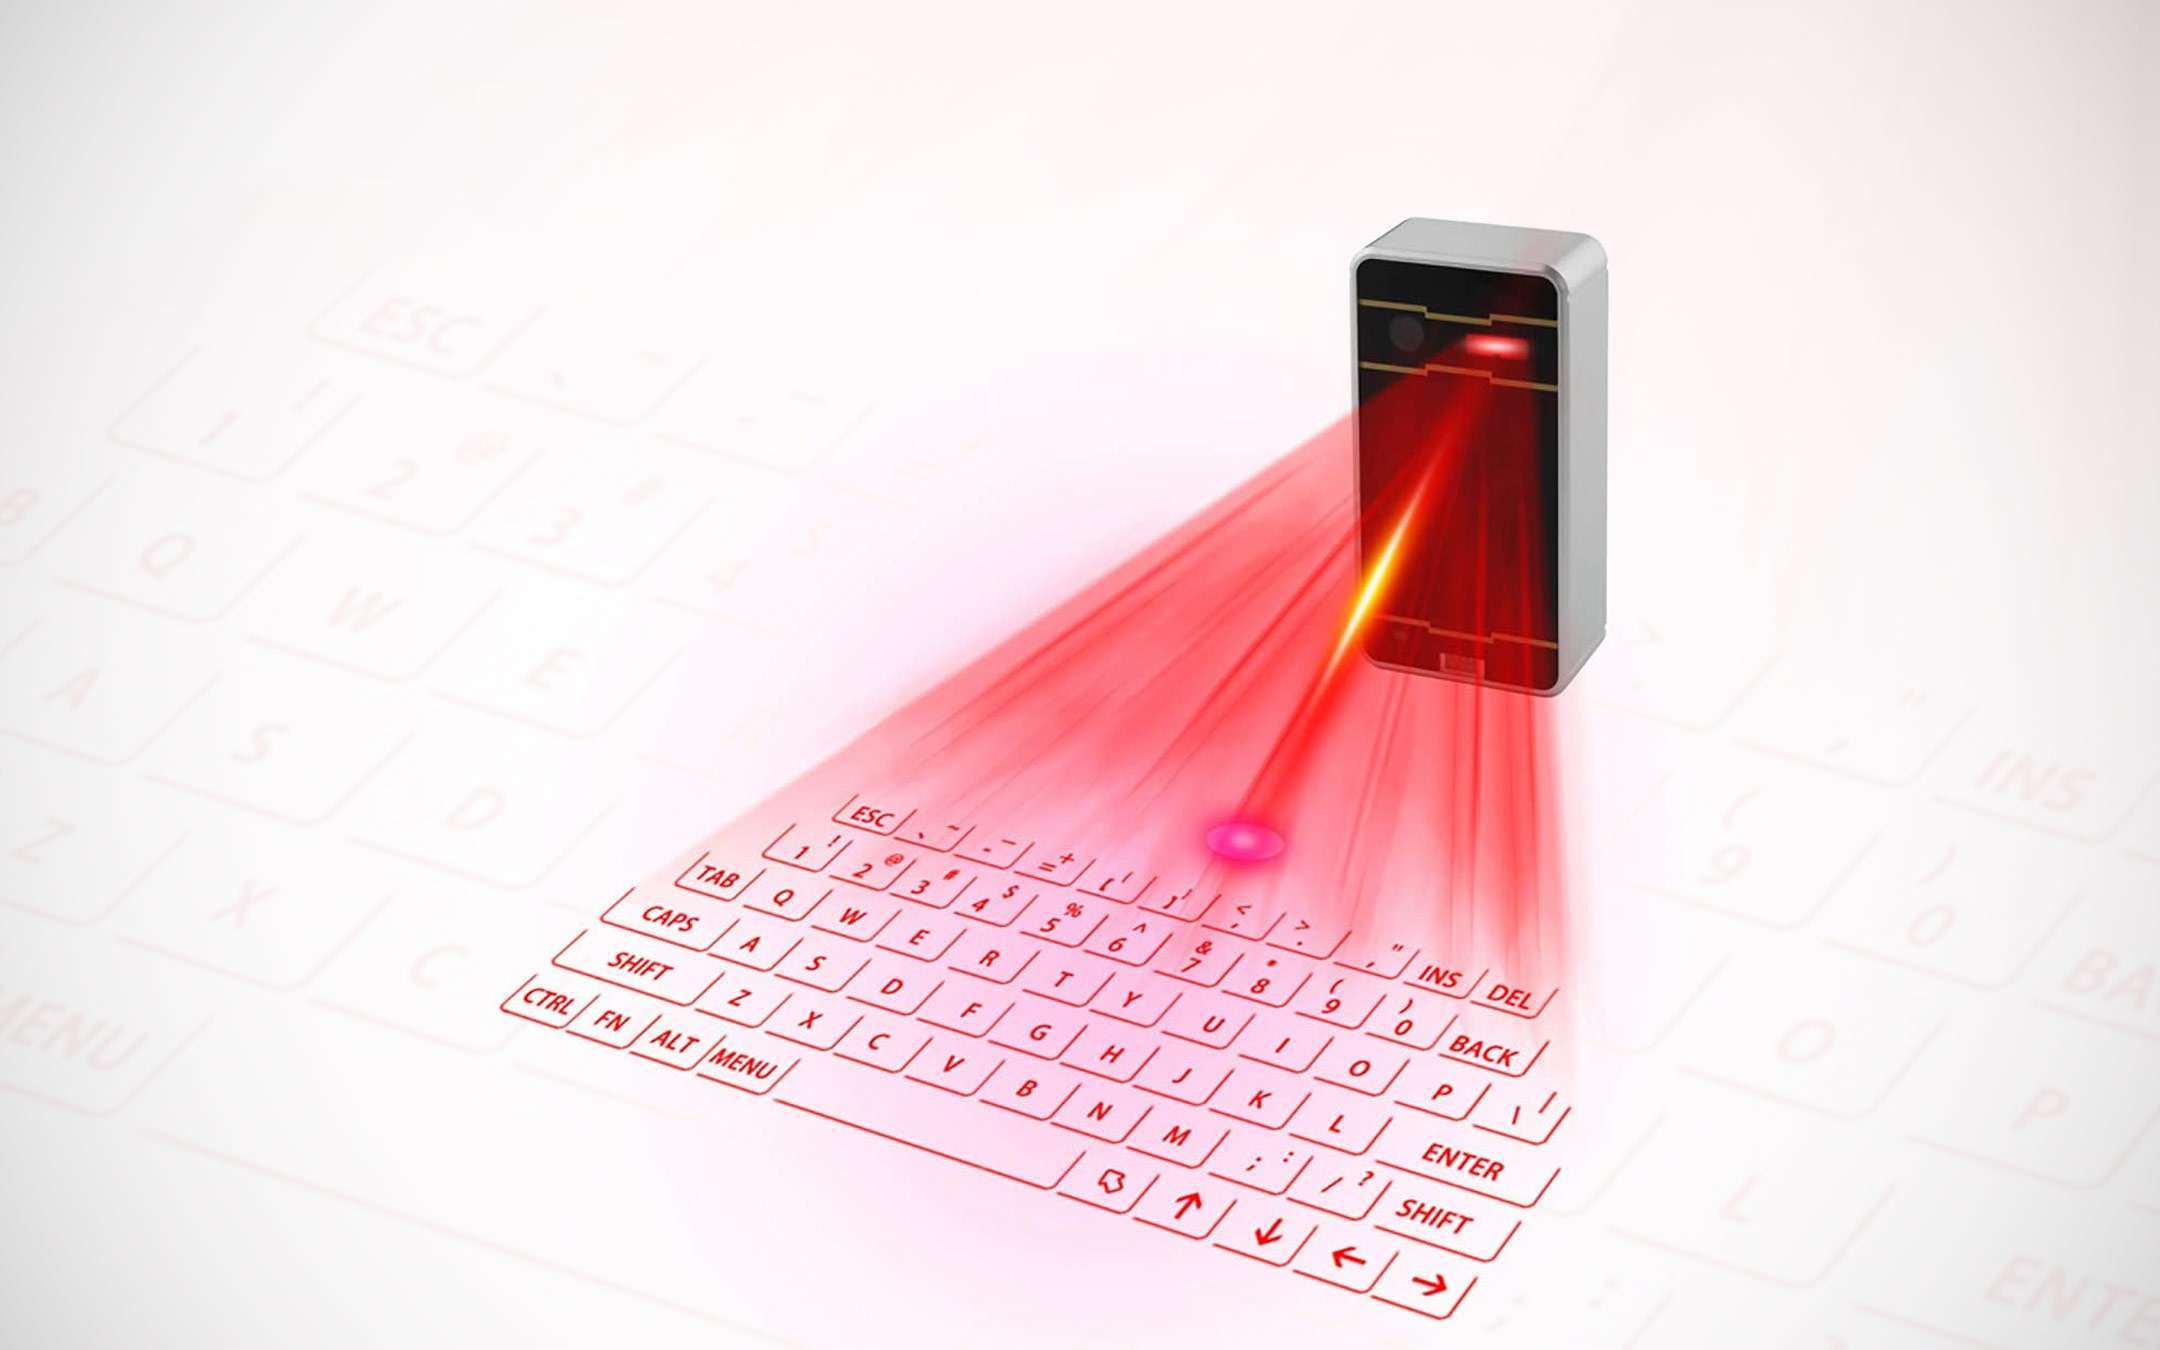 Offerte gadget hi-tech: tastiera laser in sconto